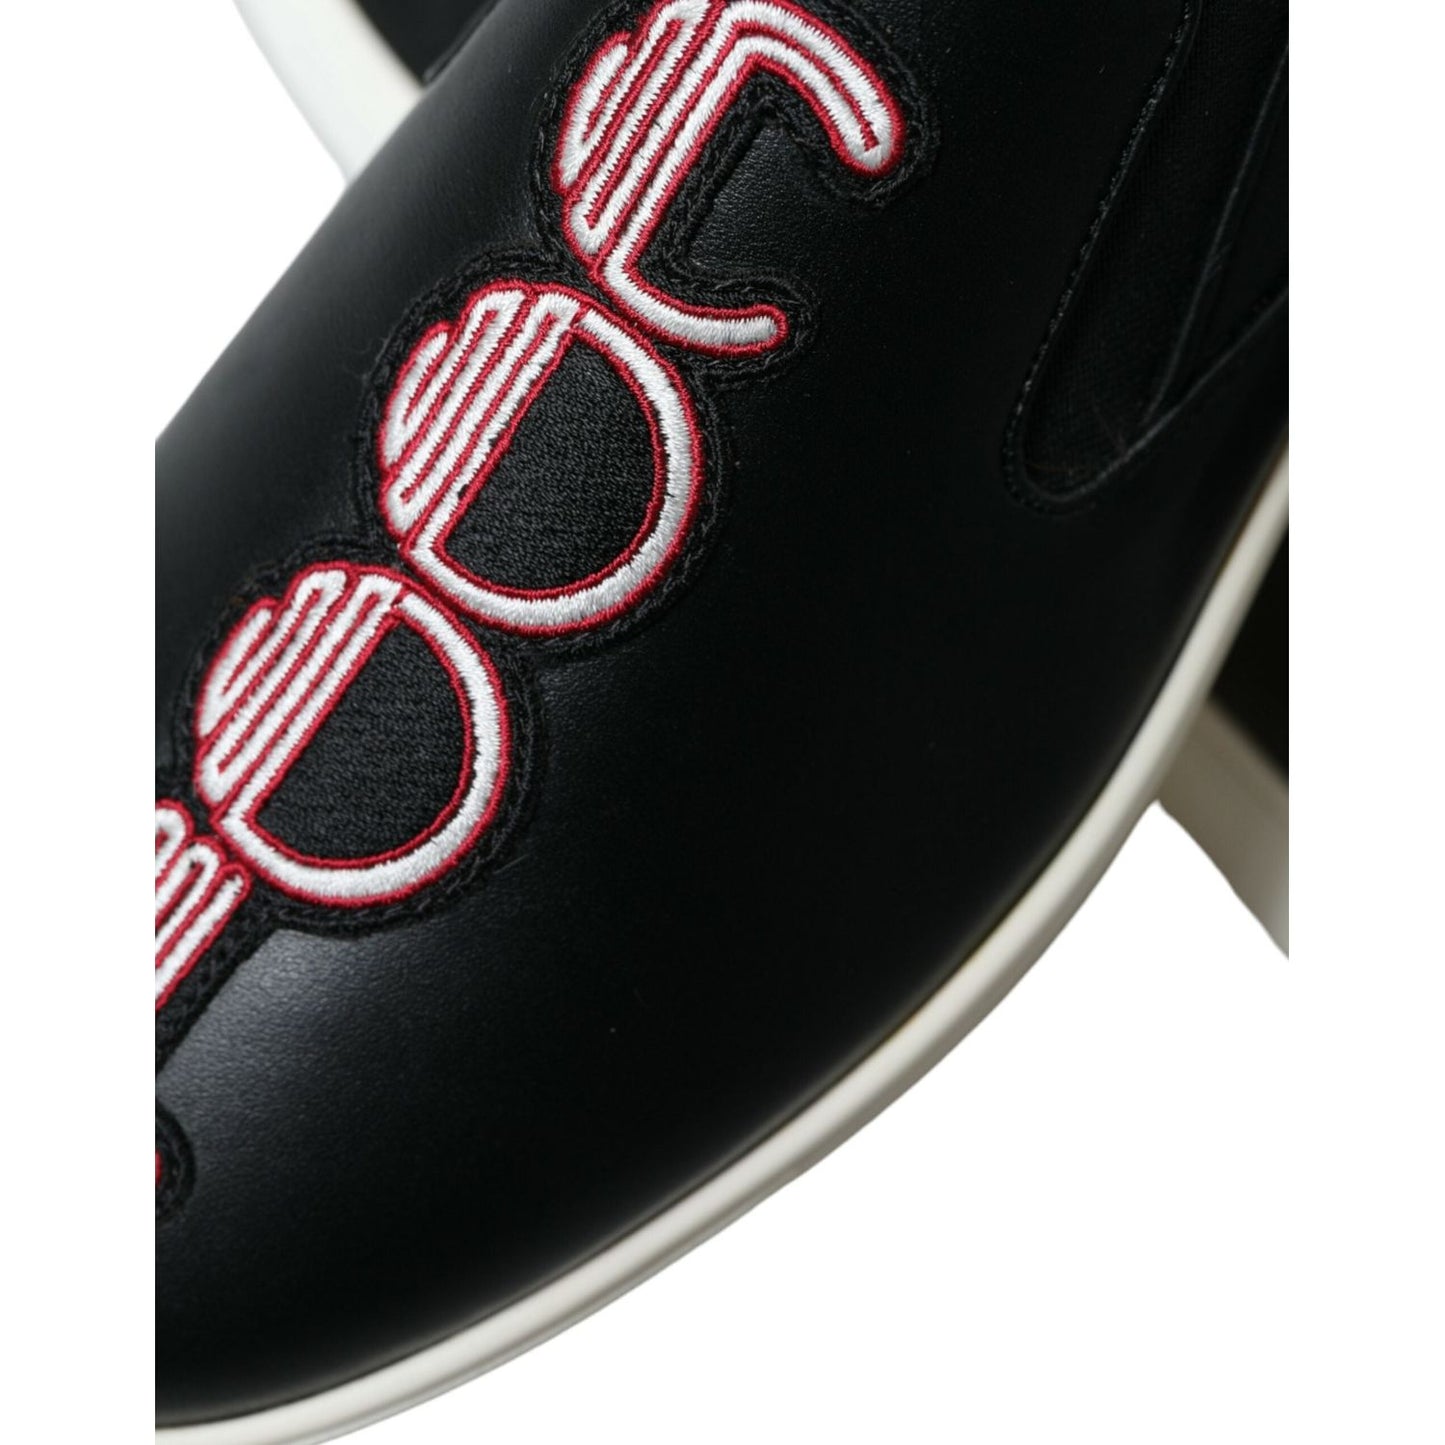 Dolce & Gabbana Elegant Black Slip-On Sneakers black-patch-embellished-slip-on-men-sneakers-shoes